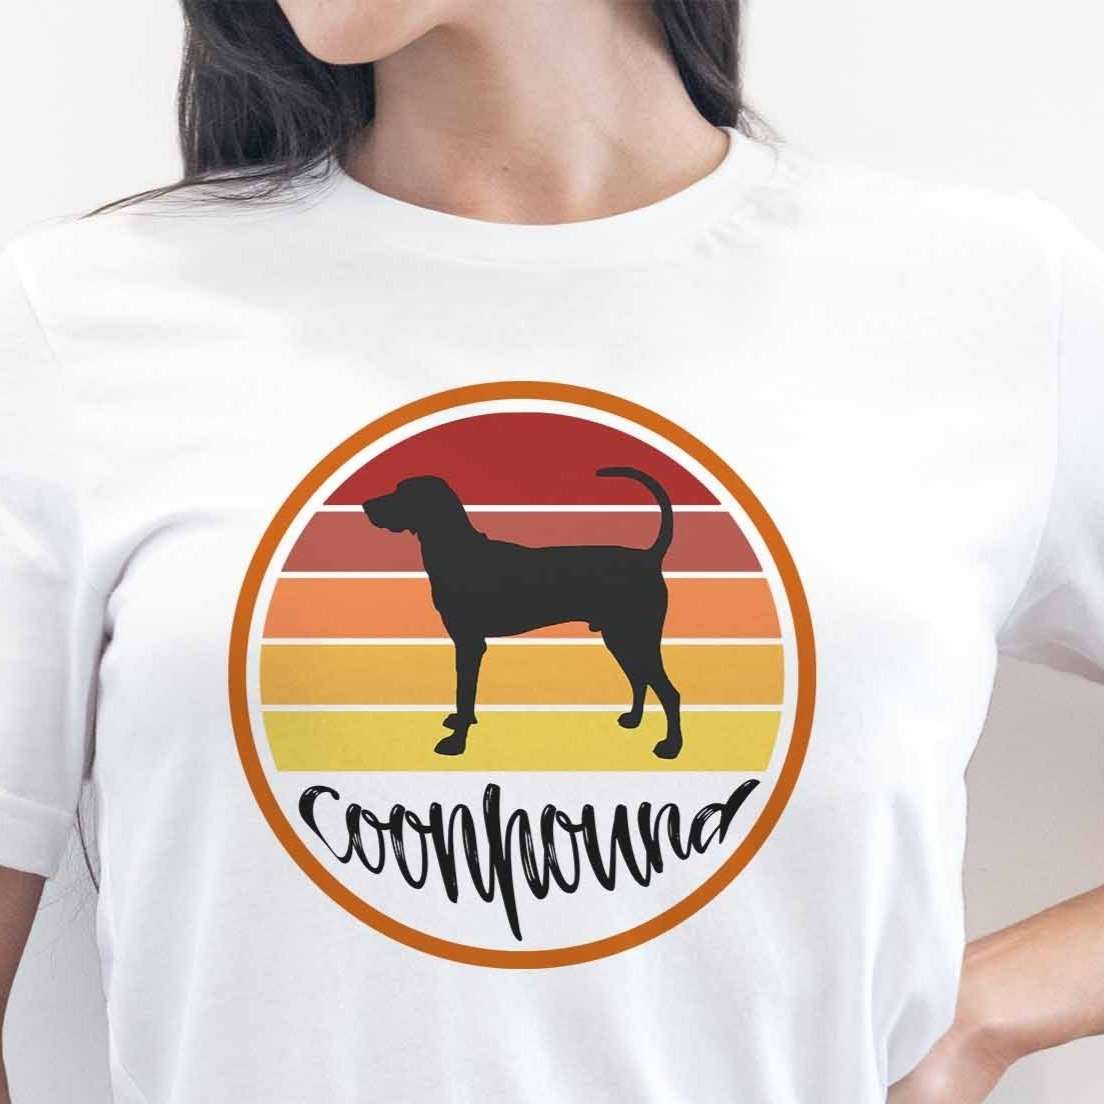 Coonhound - My Custom Tee Party